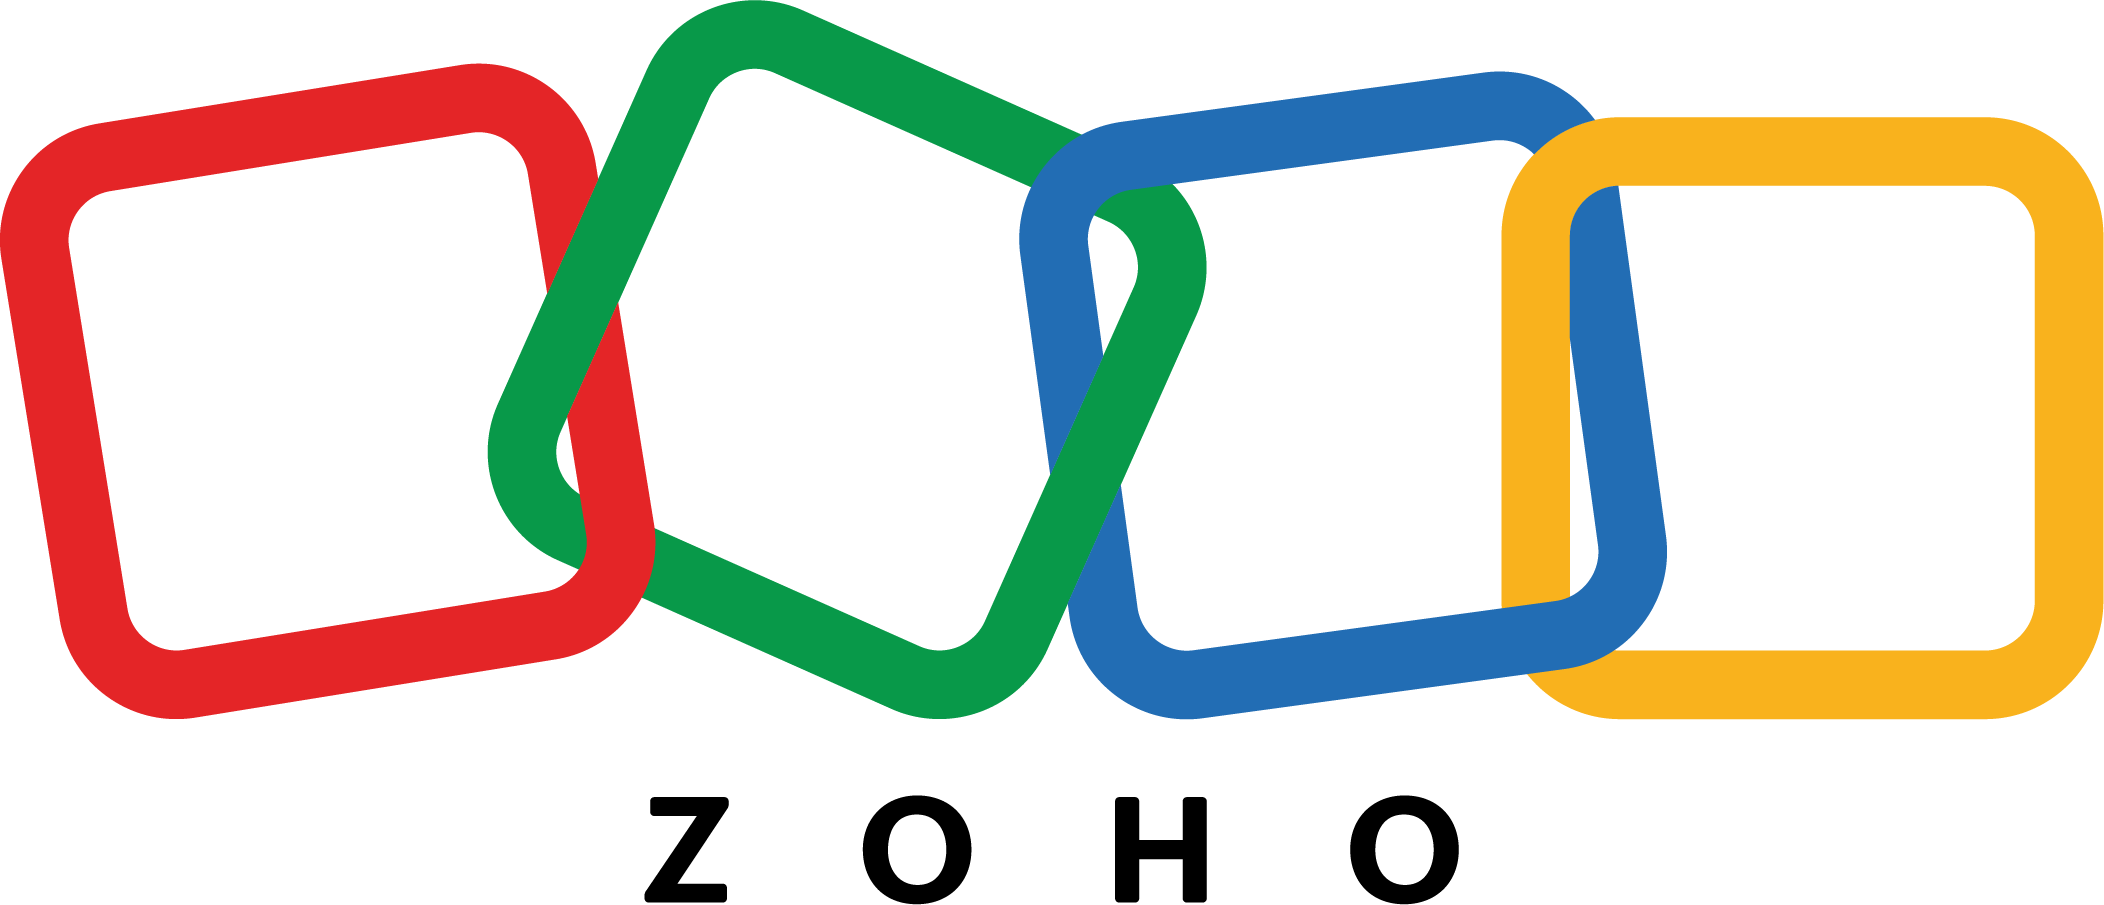 fv-logo